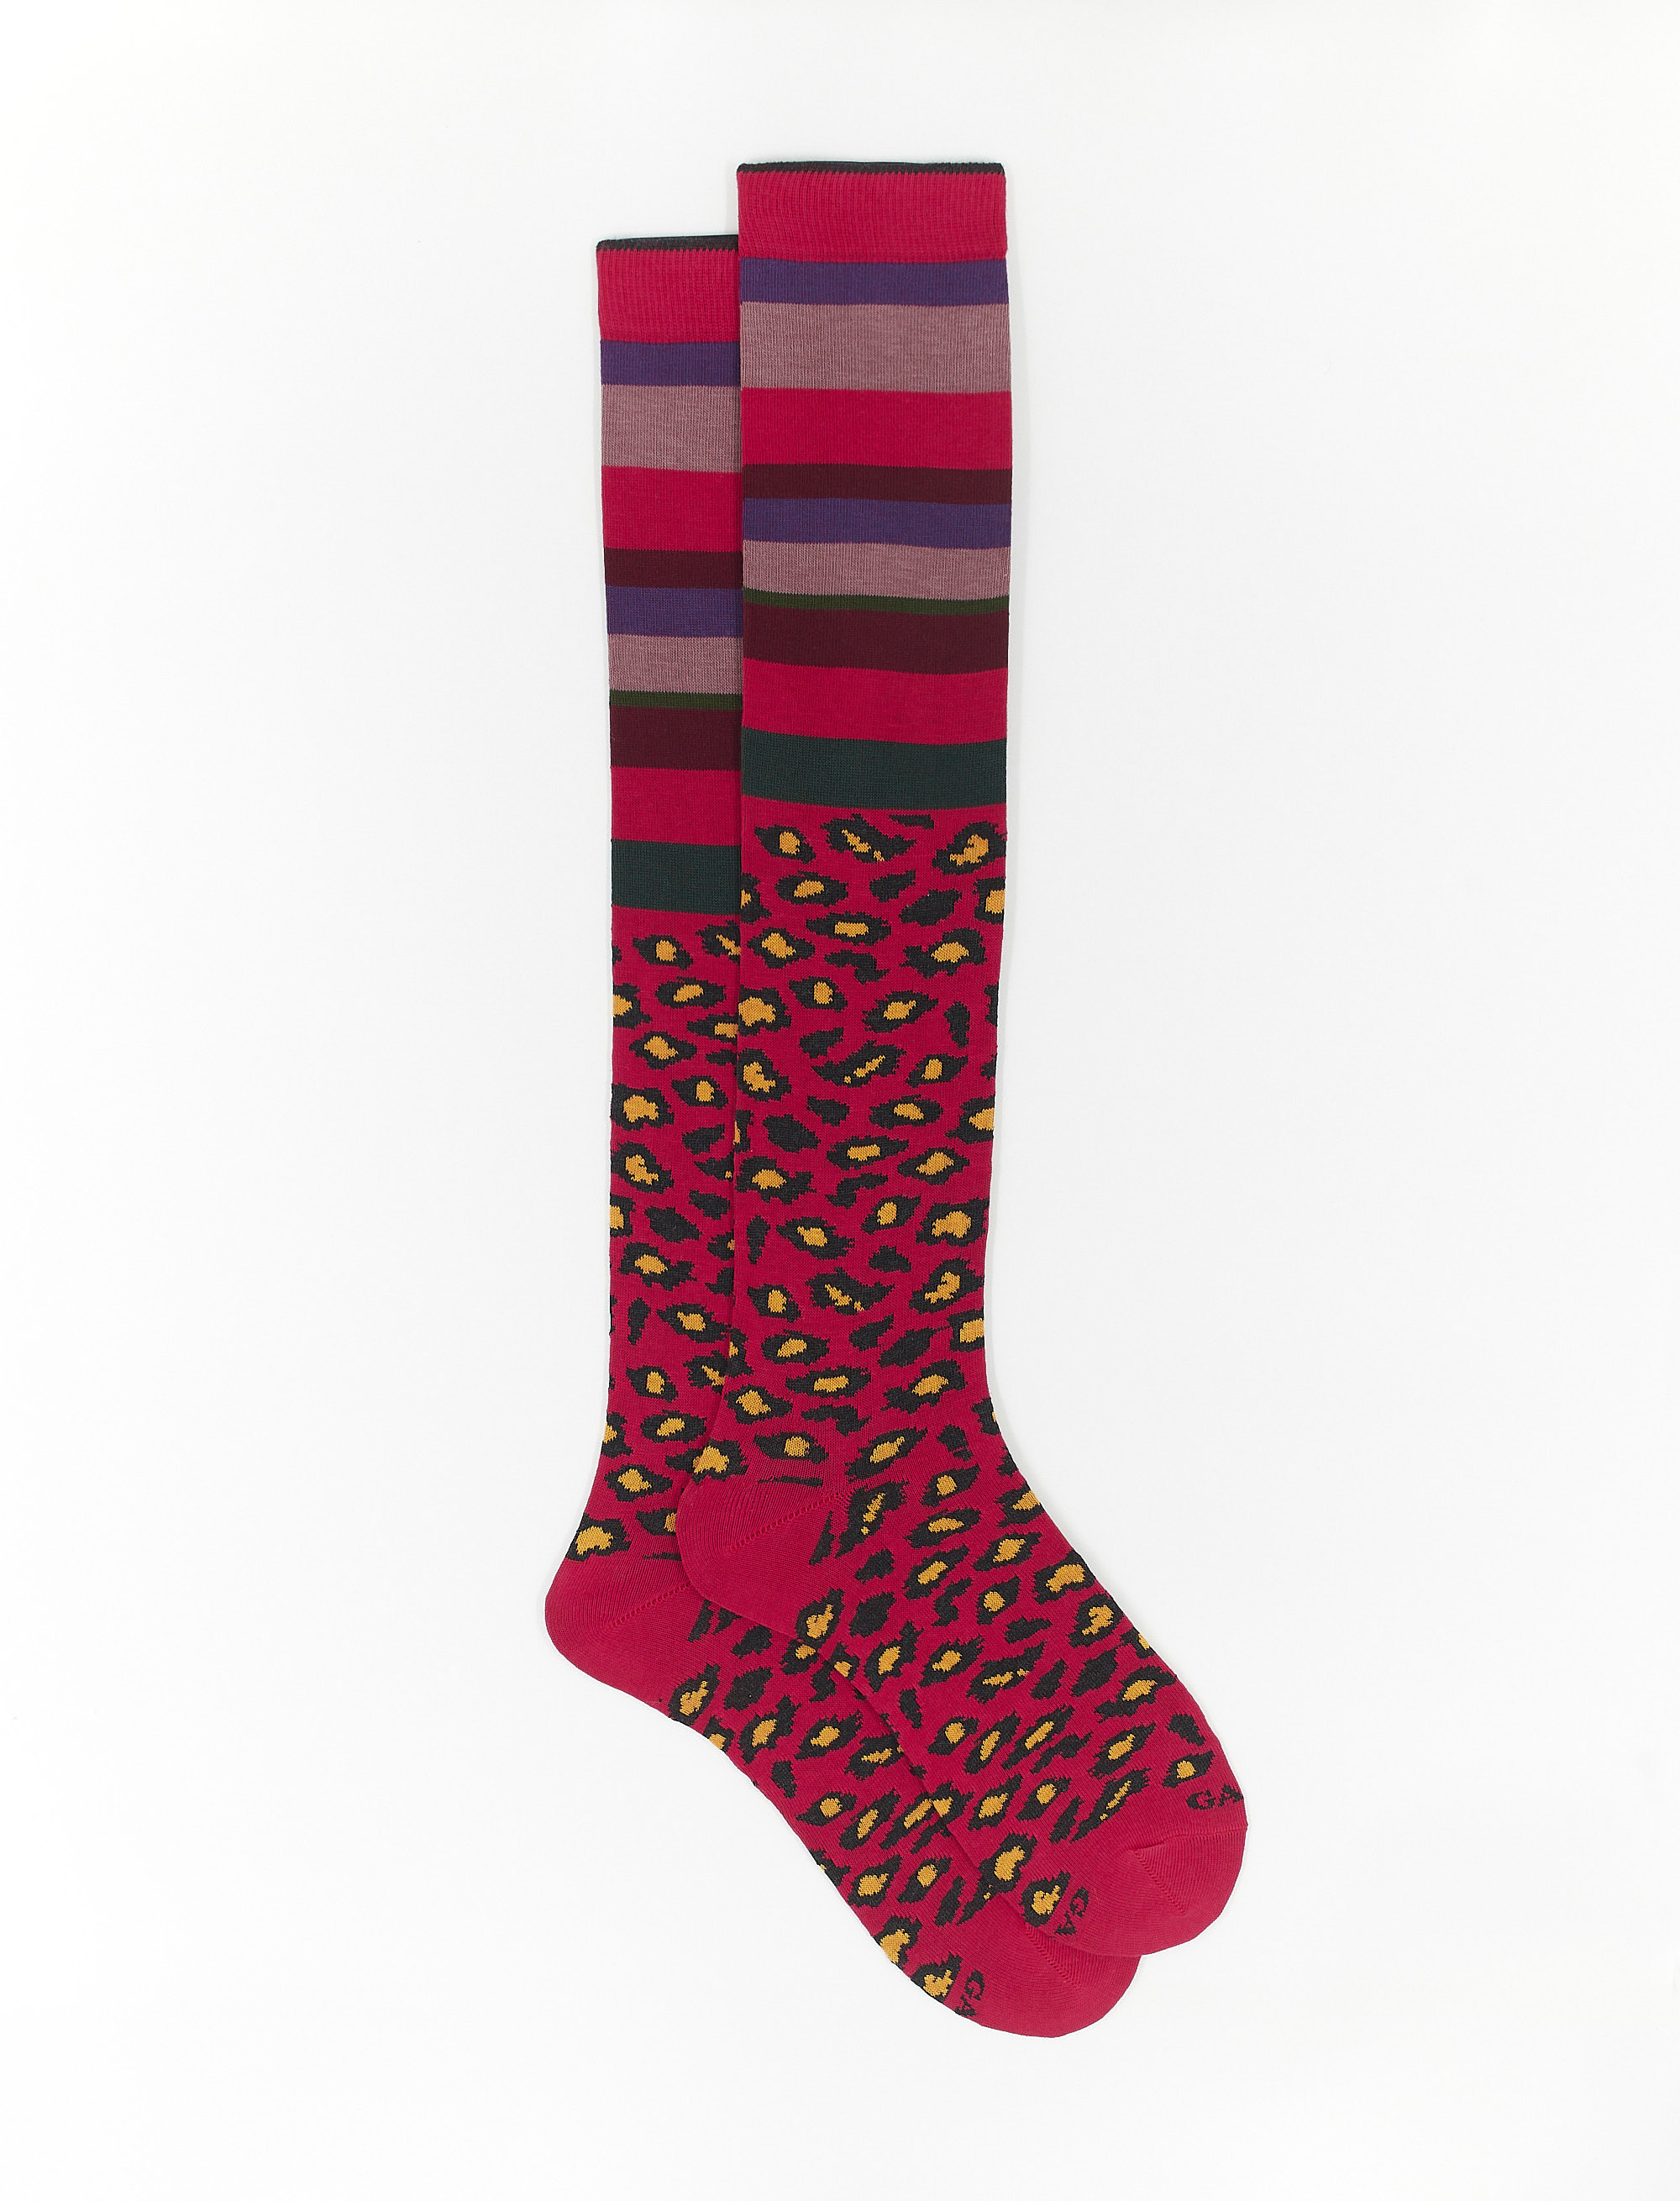 Calze lunghe donna cotone rubino righe multicolor con fascia maculata - Gallo 1927 - Official Online Shop